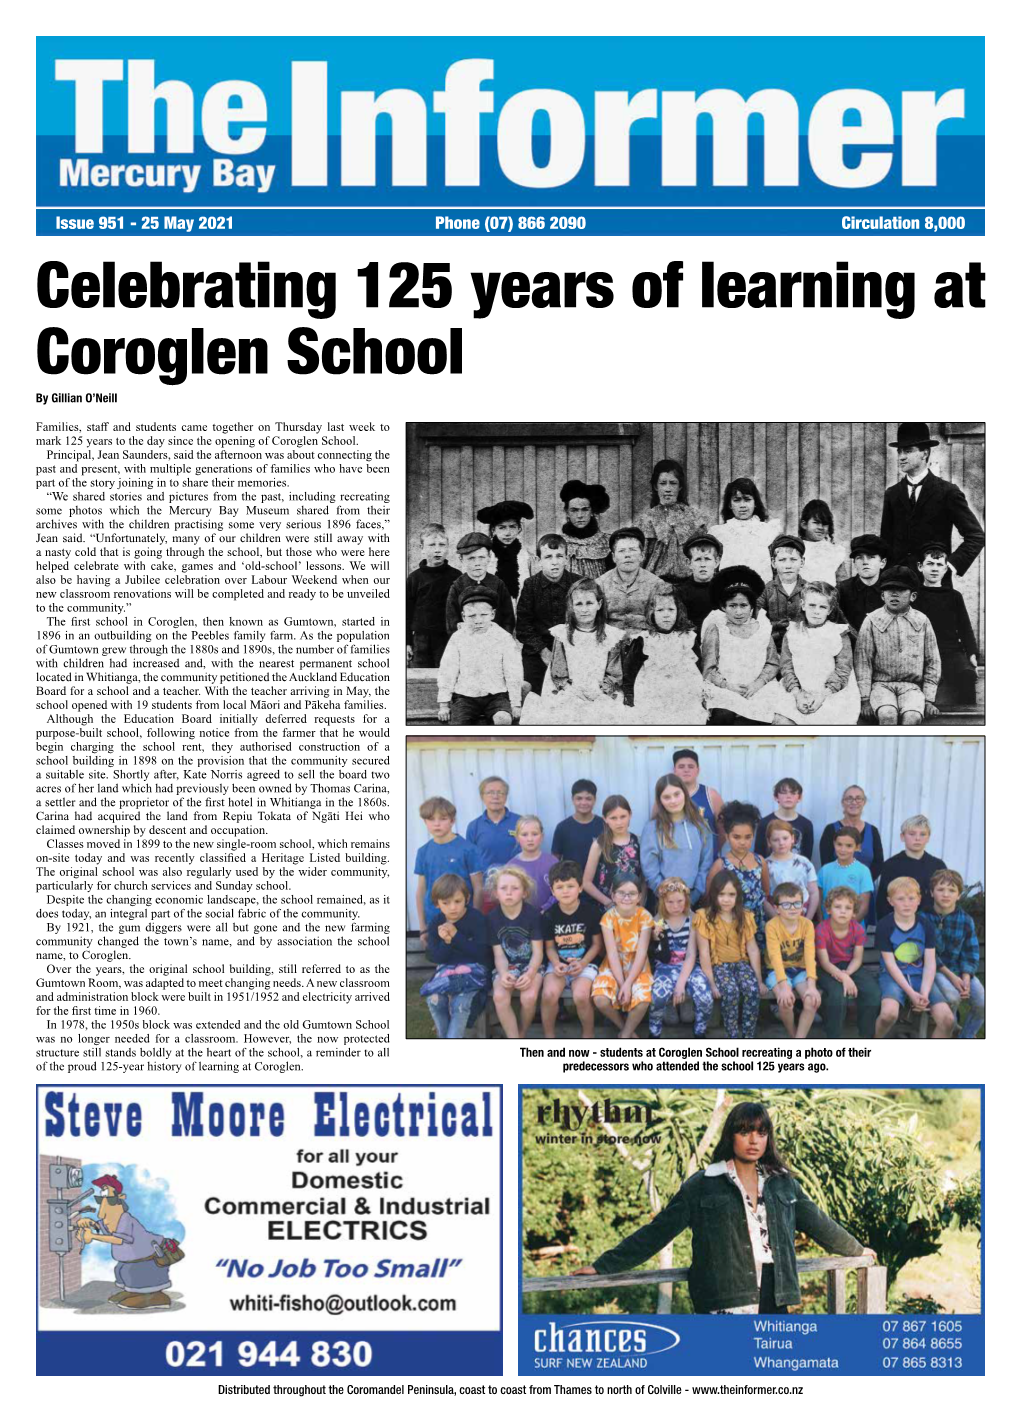 Celebrating 125 Years of Learning at Coroglen School by Gillian O’Neill